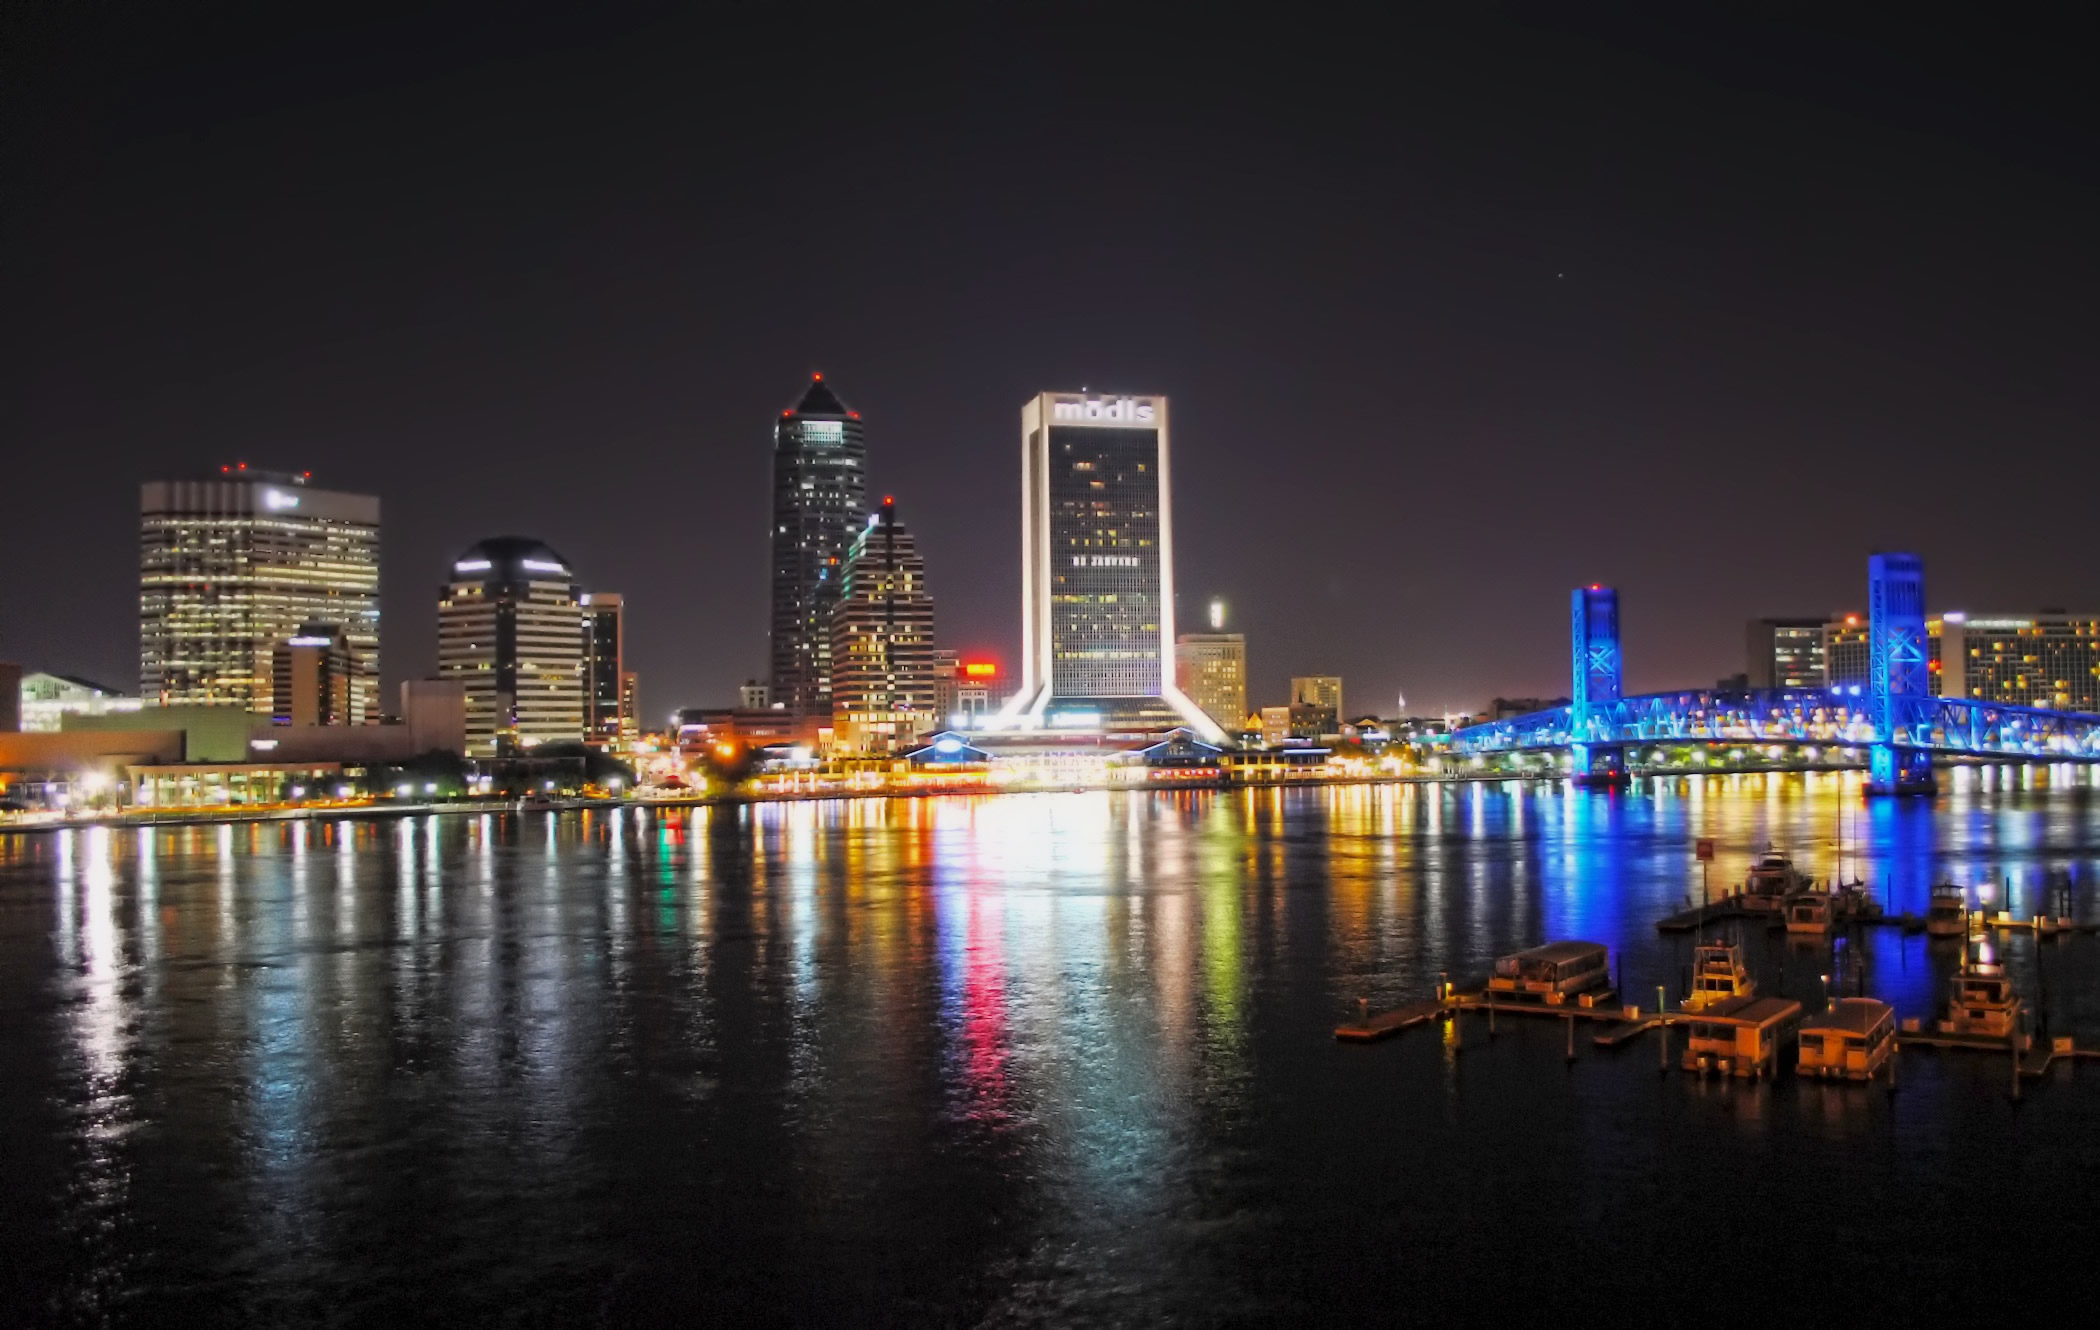 Jacksonville at night